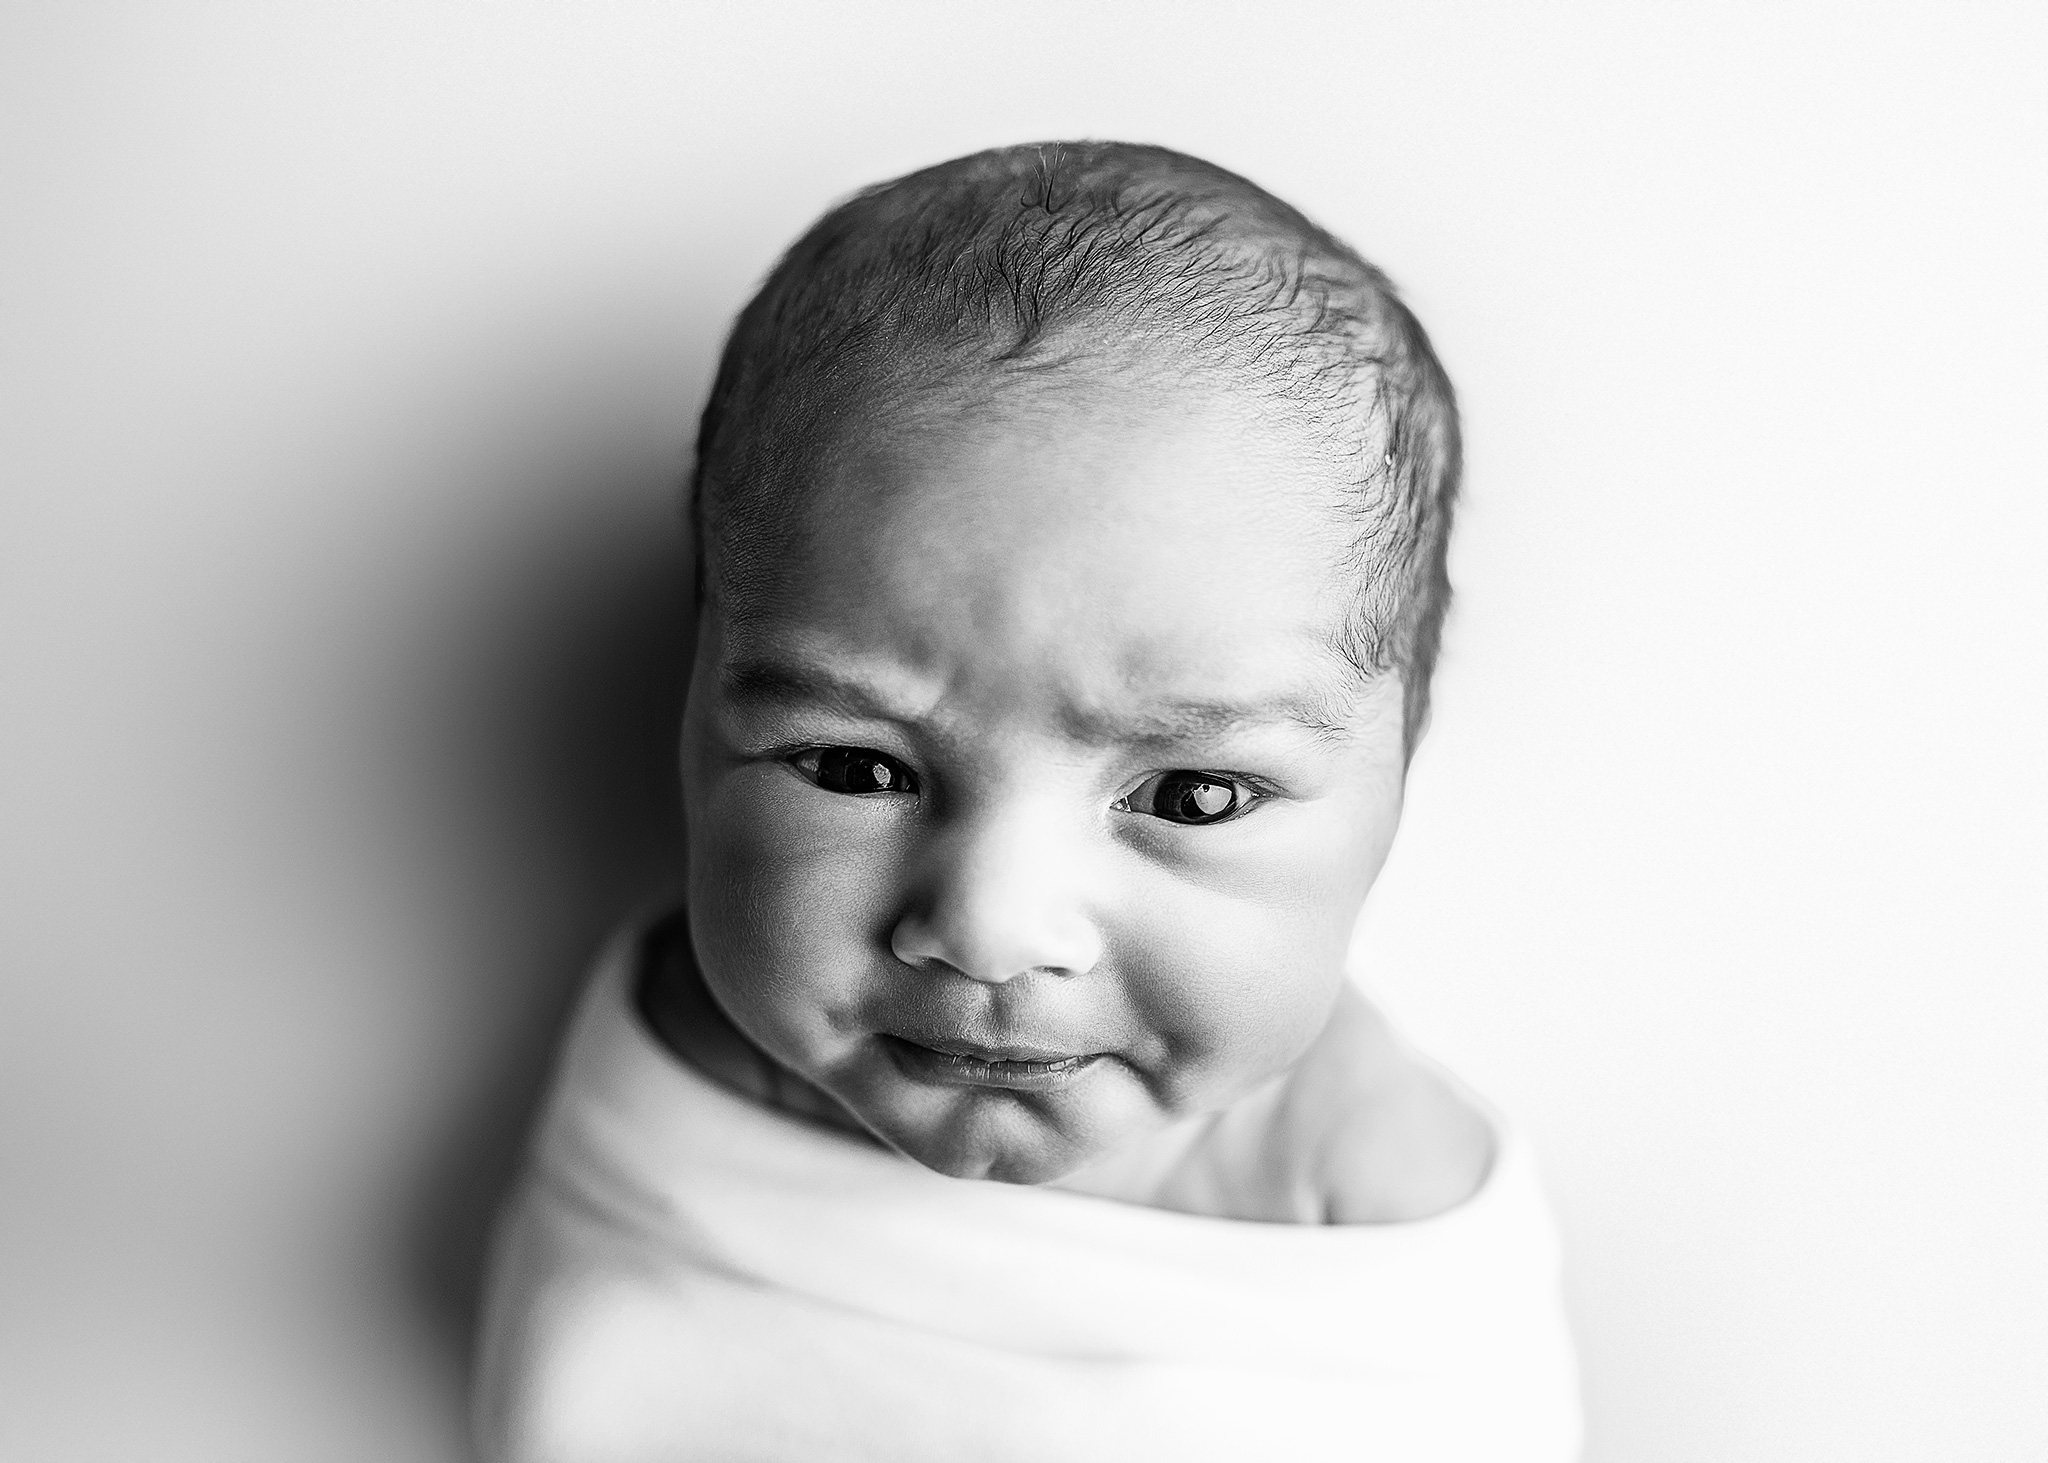 baby boy detail shots, baby awake during photo session, newborn photography lincoln ne, hospital photography linccoln ne